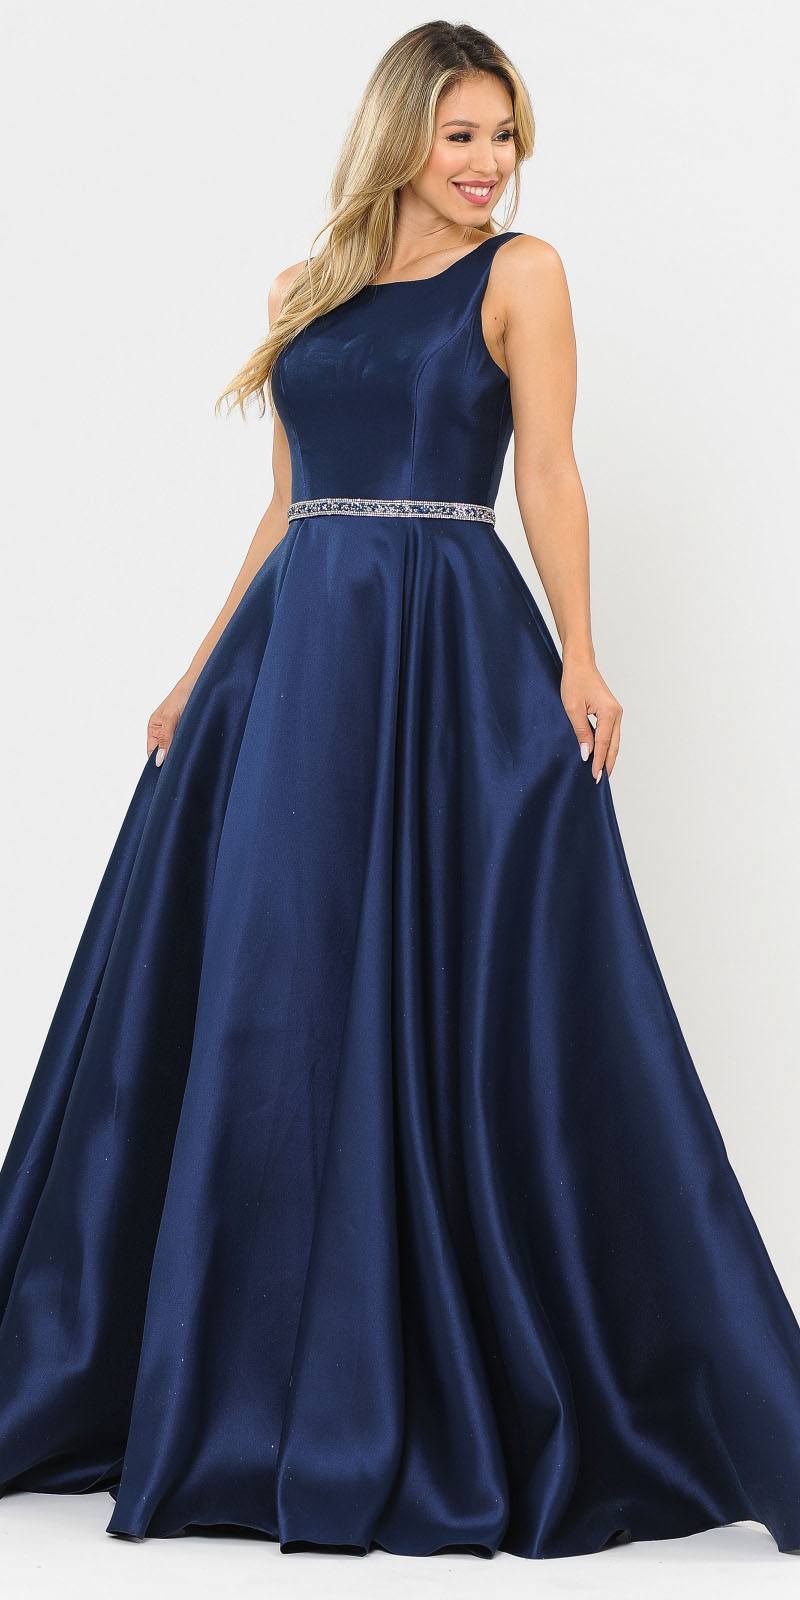 Poly USA 8678 Navy Blue Sleeveless Long Prom Dress Embellished Waist